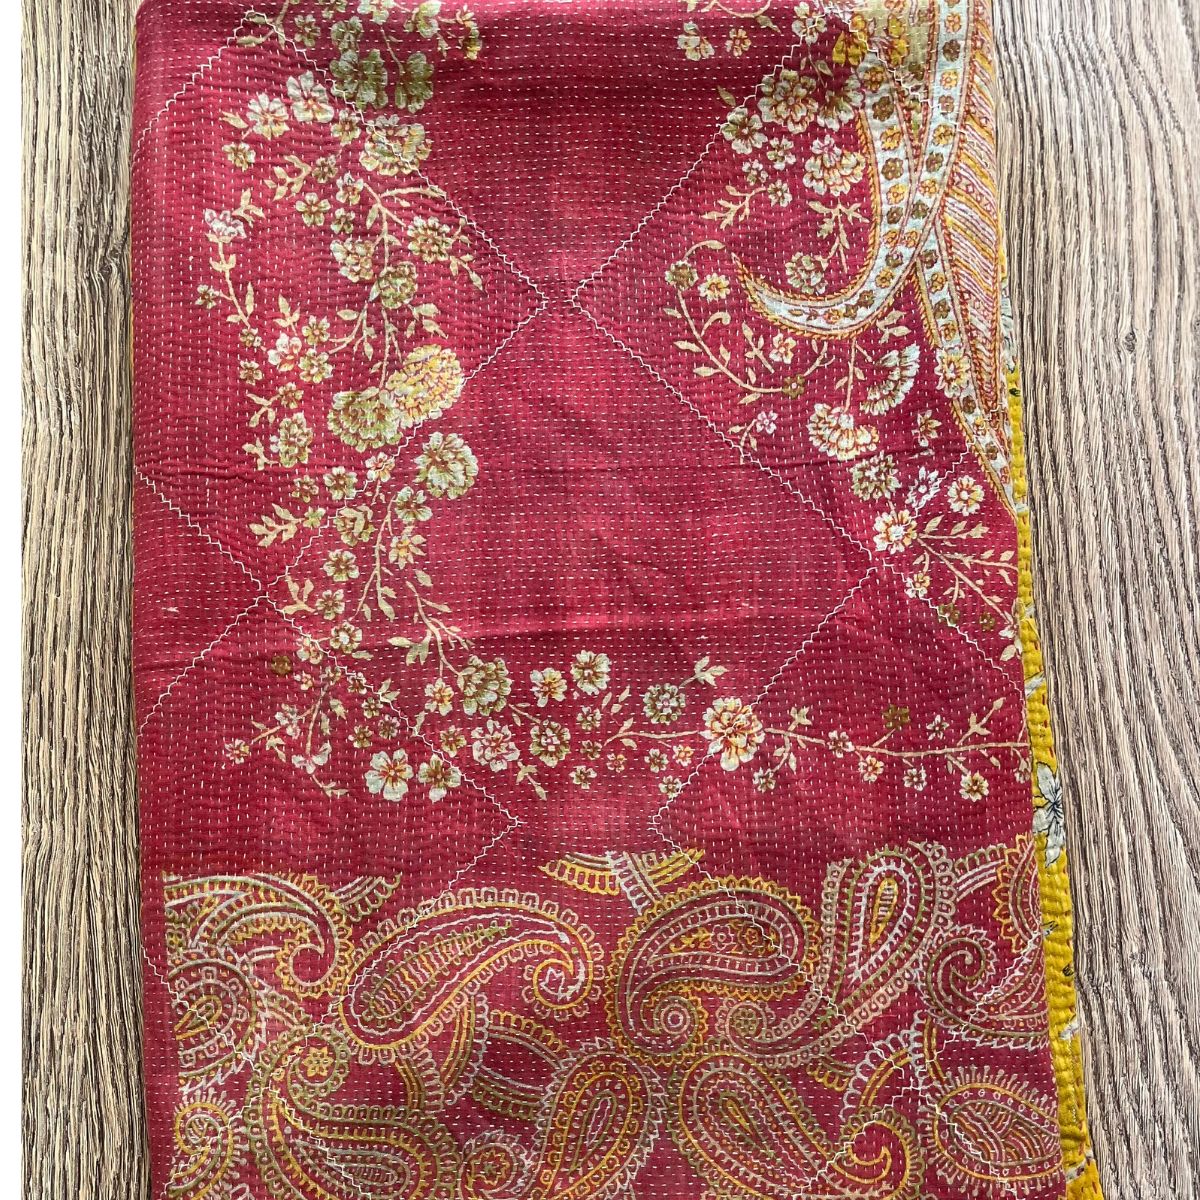 Vintage Kantha Quilt 2 - Pink paisley